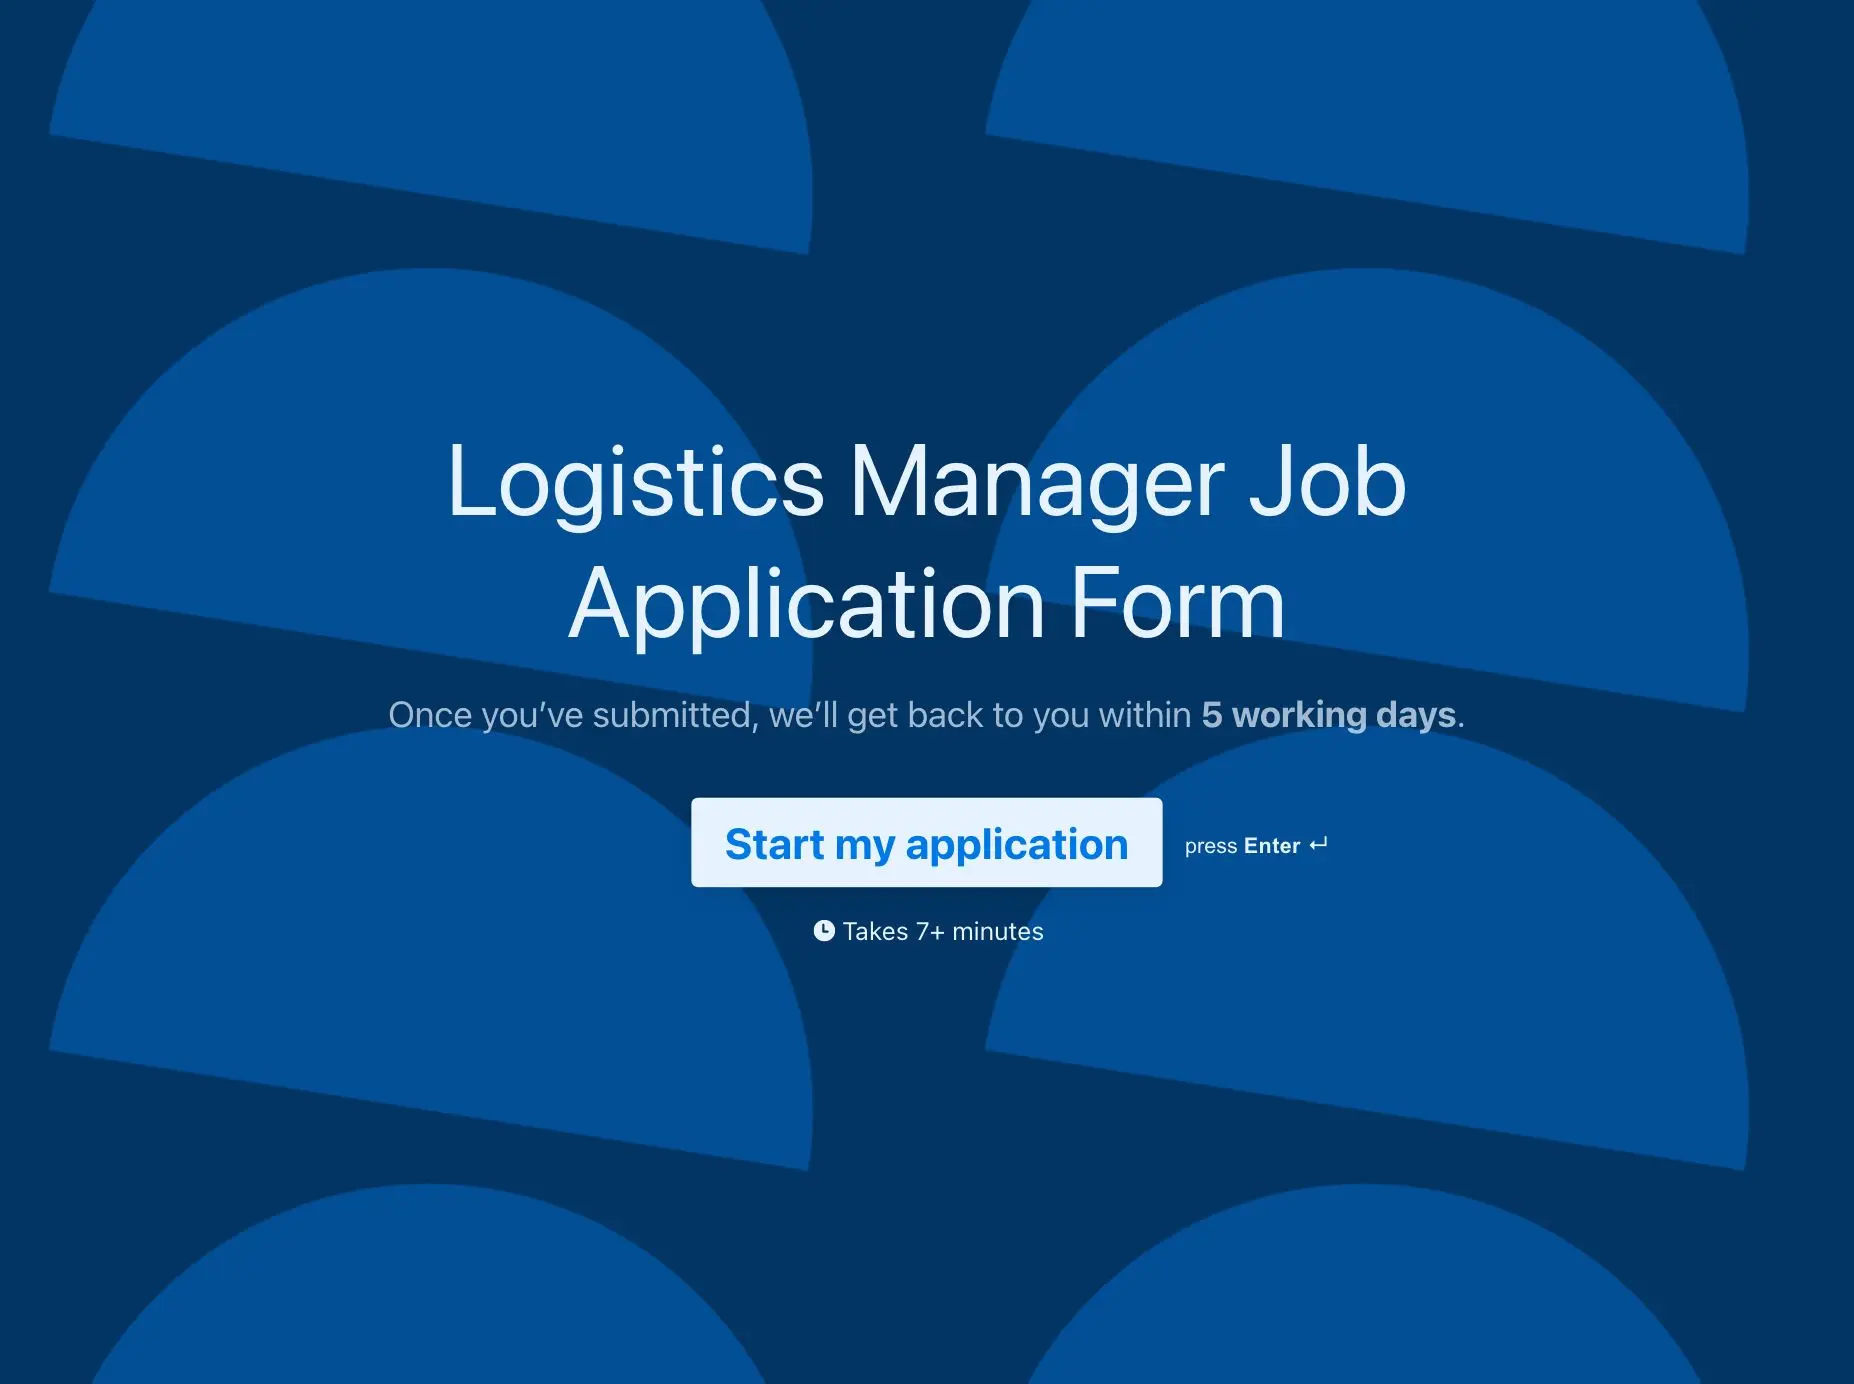 Logistics Manager Job Application Form Template Hero